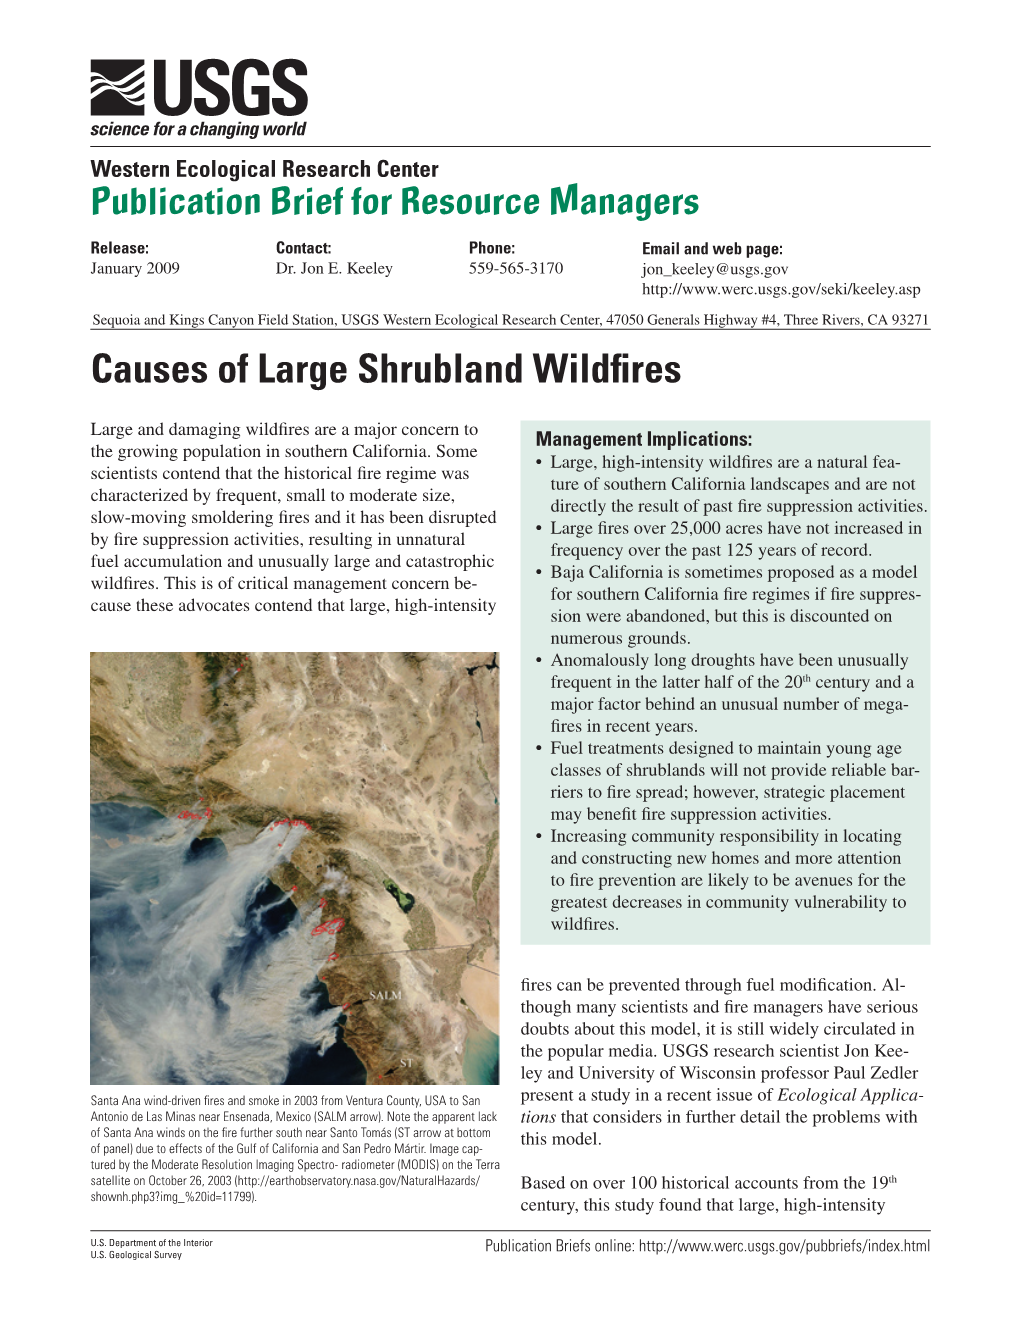 USGS Publication Brief on Above Paper